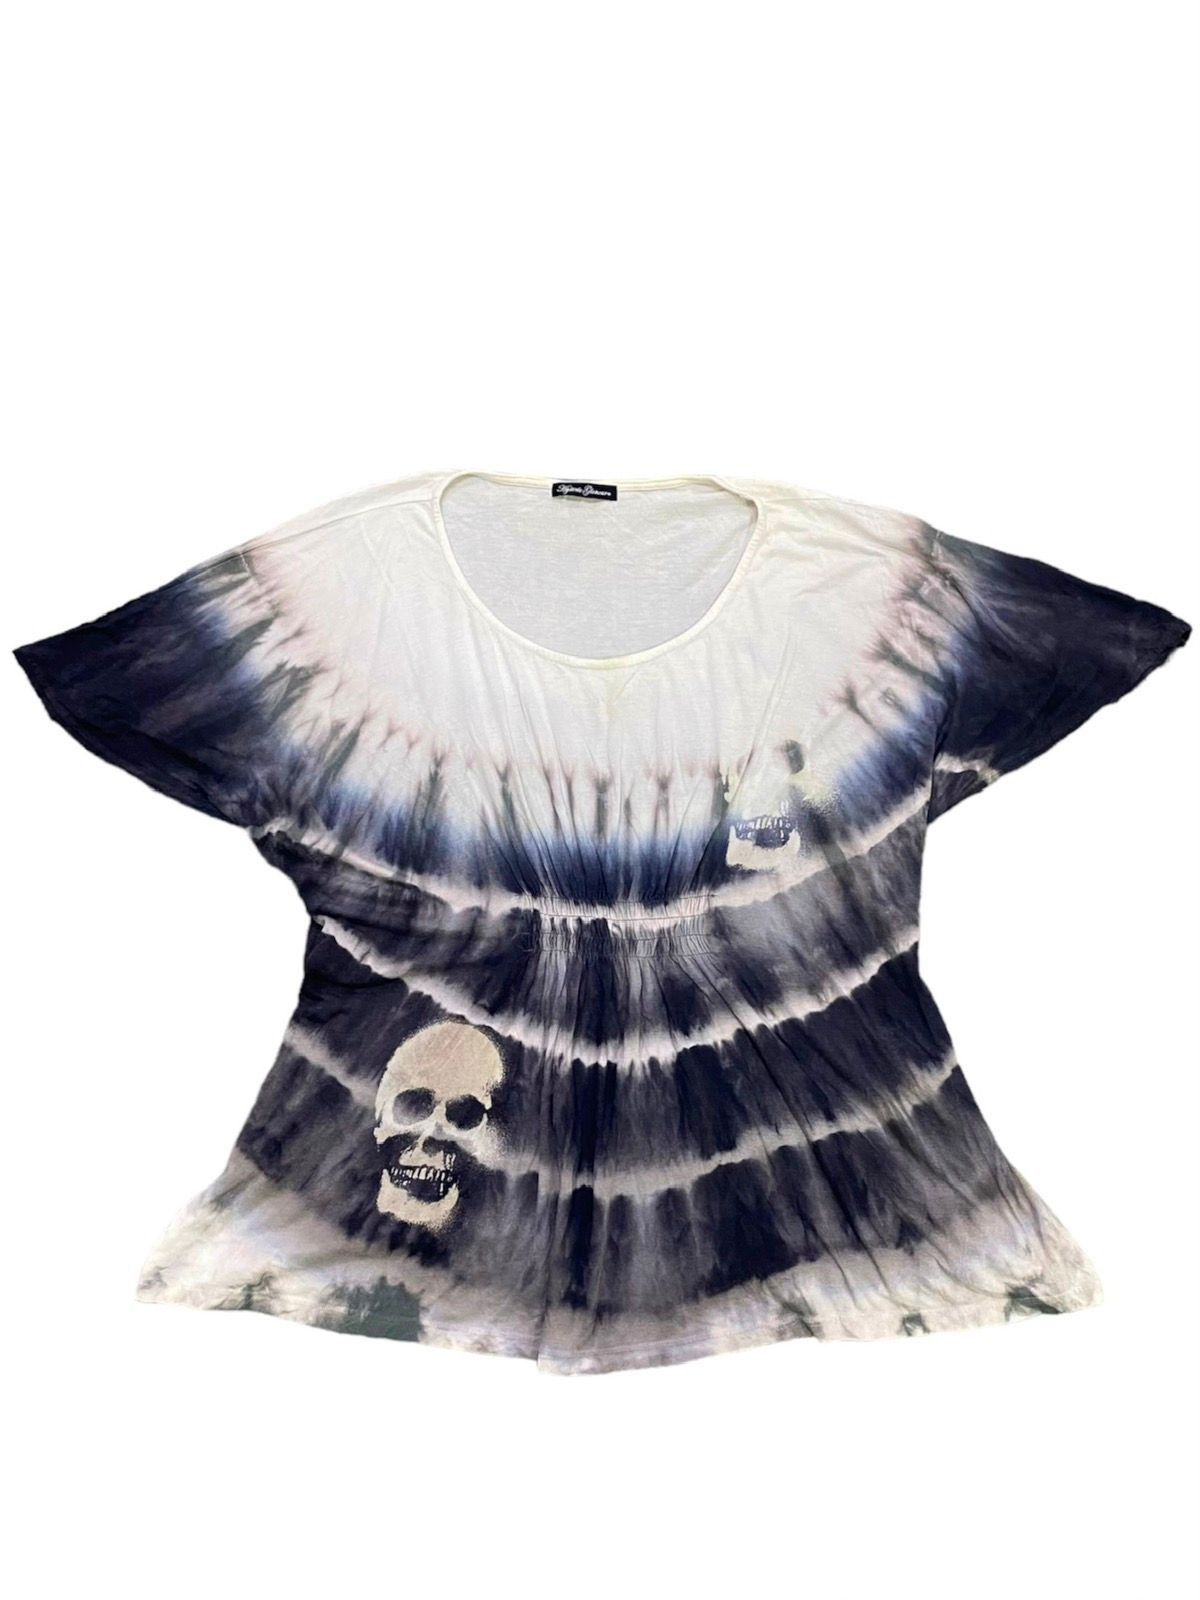 Hysteric Glamour Skull Tie Dye Sleeveless Blouse T-Shirt - 1